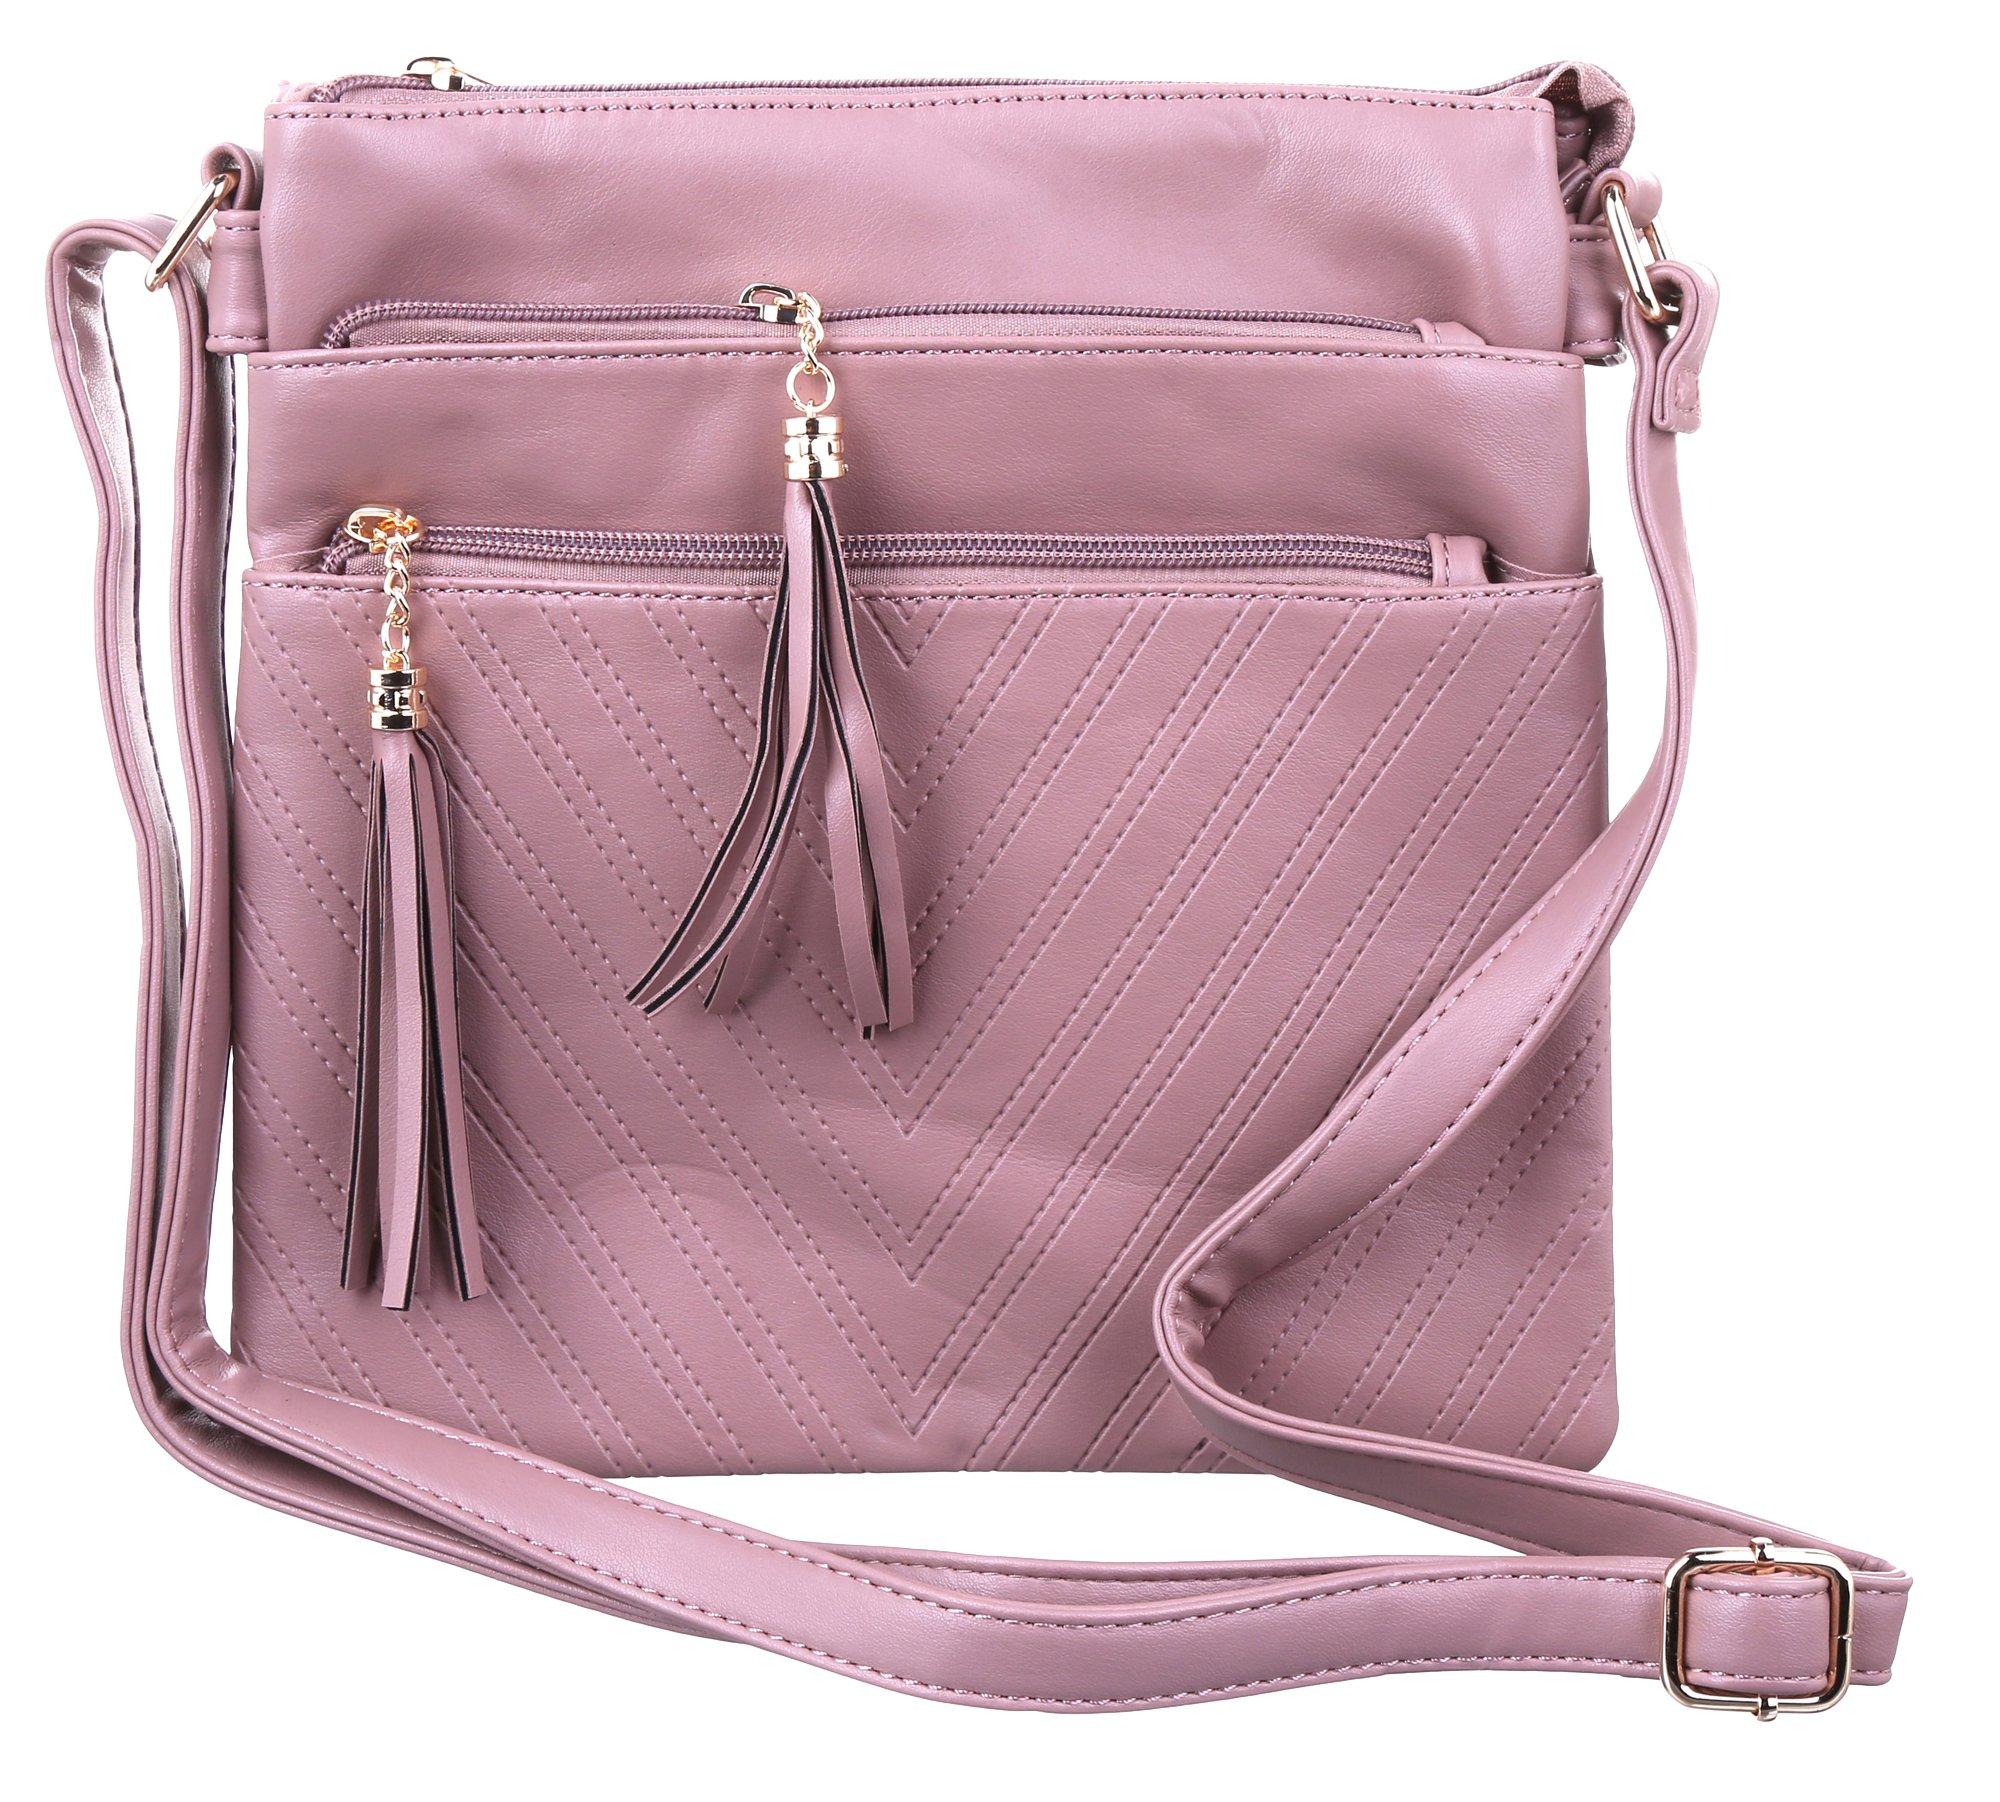 B Brentano Vegan Multi-Zipper Crossbody Handbag Purse with Tassel Accents